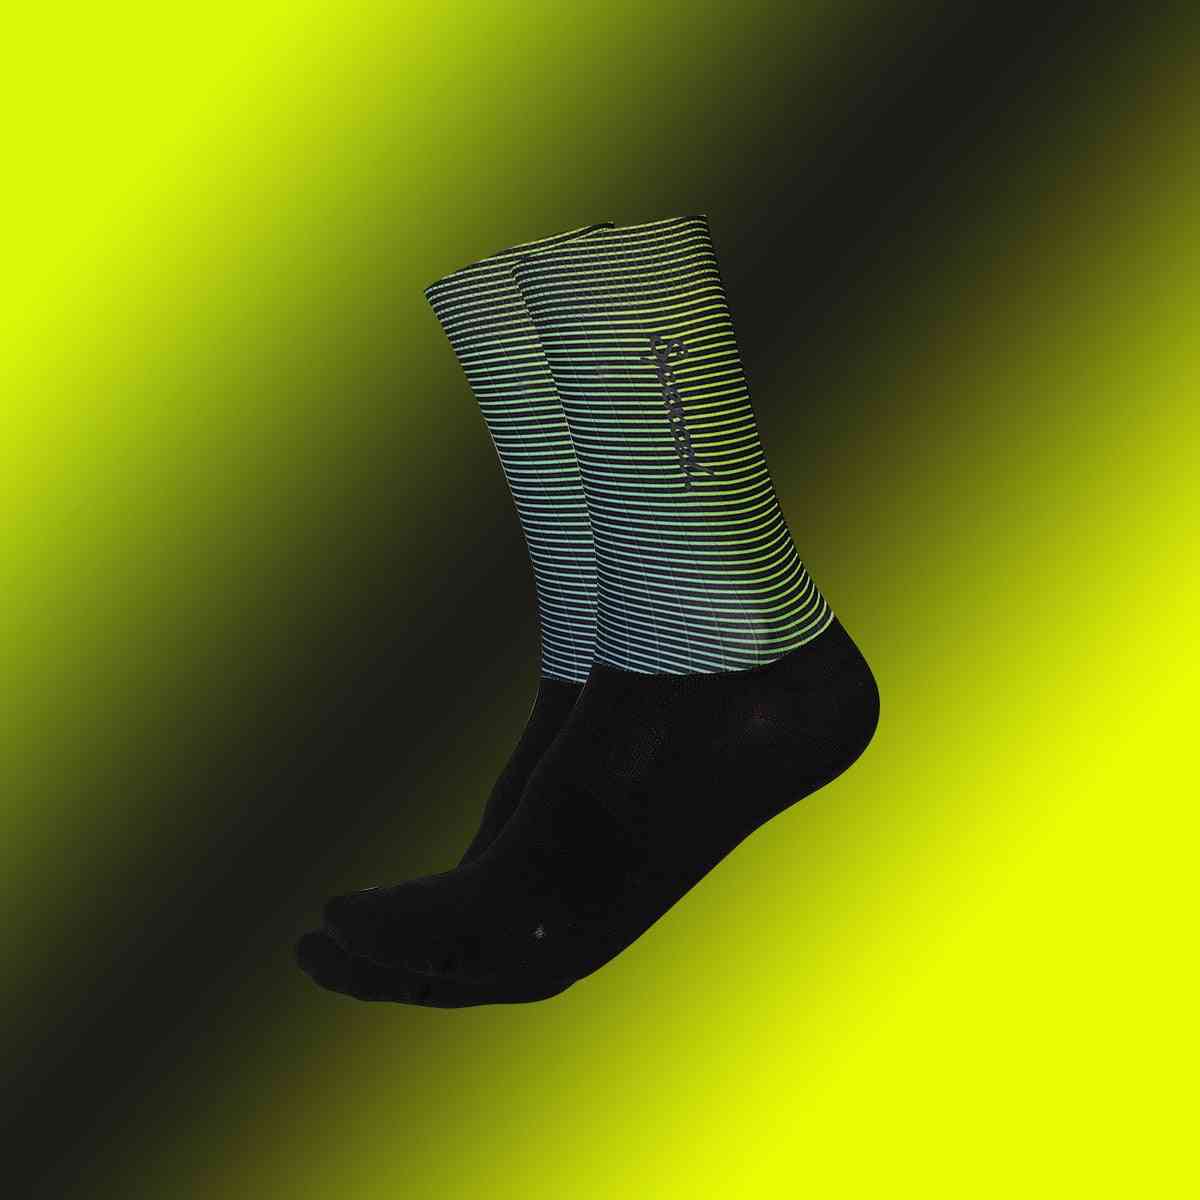 Unisex Pro Cycling Reflective Socks